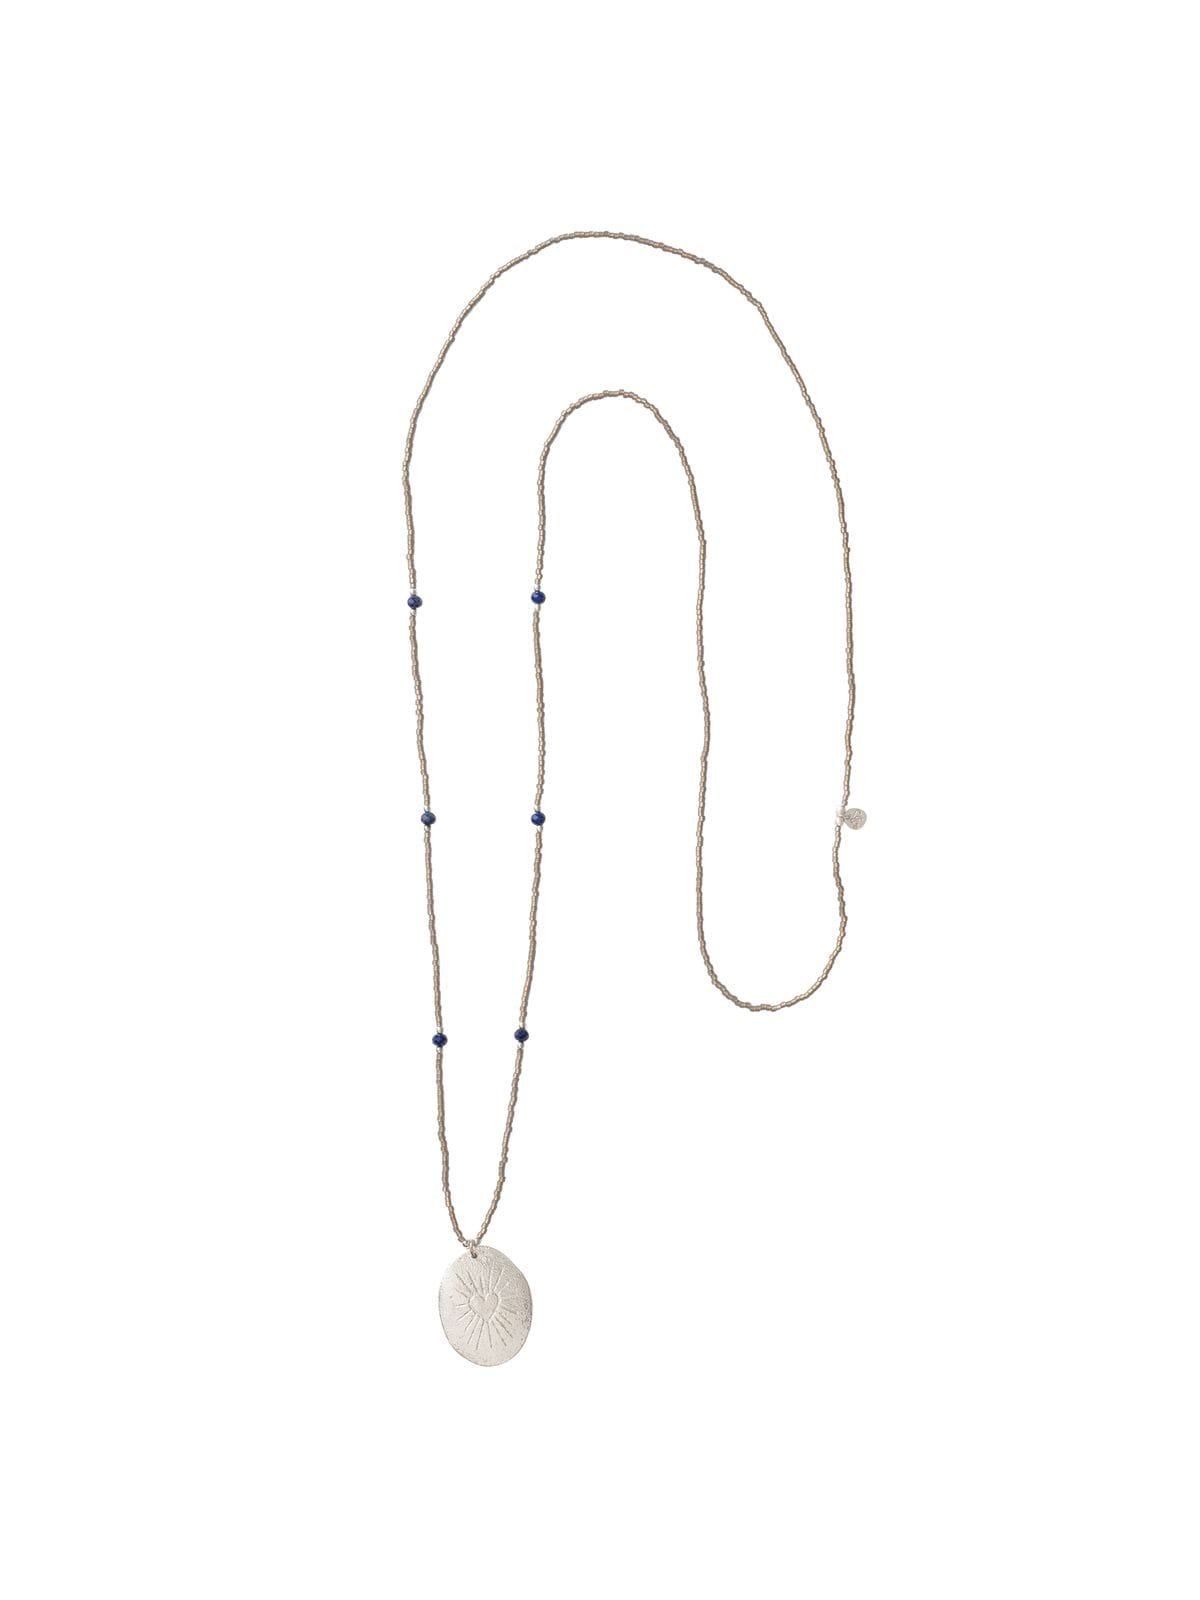 BL25516_1 - Swing Lapis Lazuli Silver Necklace_1200x1600